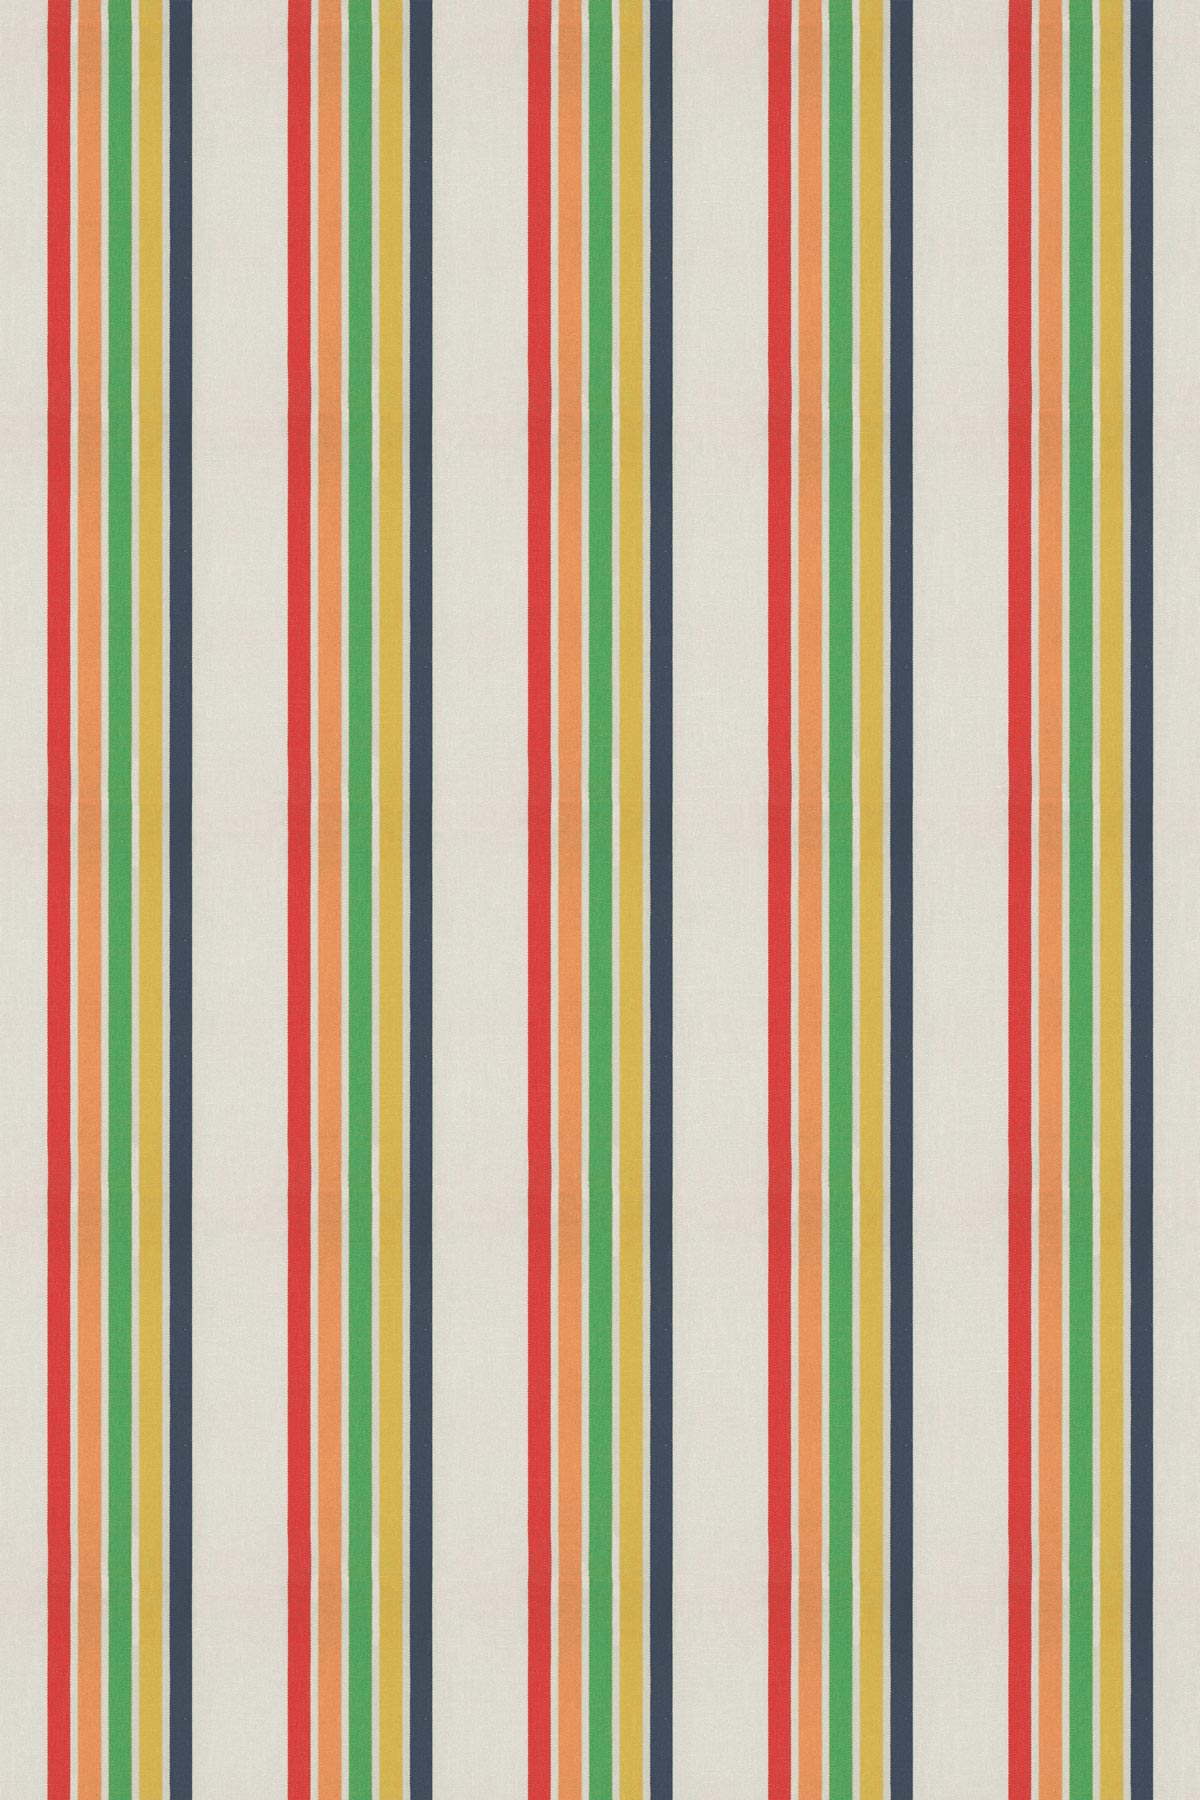 Helter Skelter Stripe Fabric - Navy / Poppy / Apricot / Gekko - by Harlequin